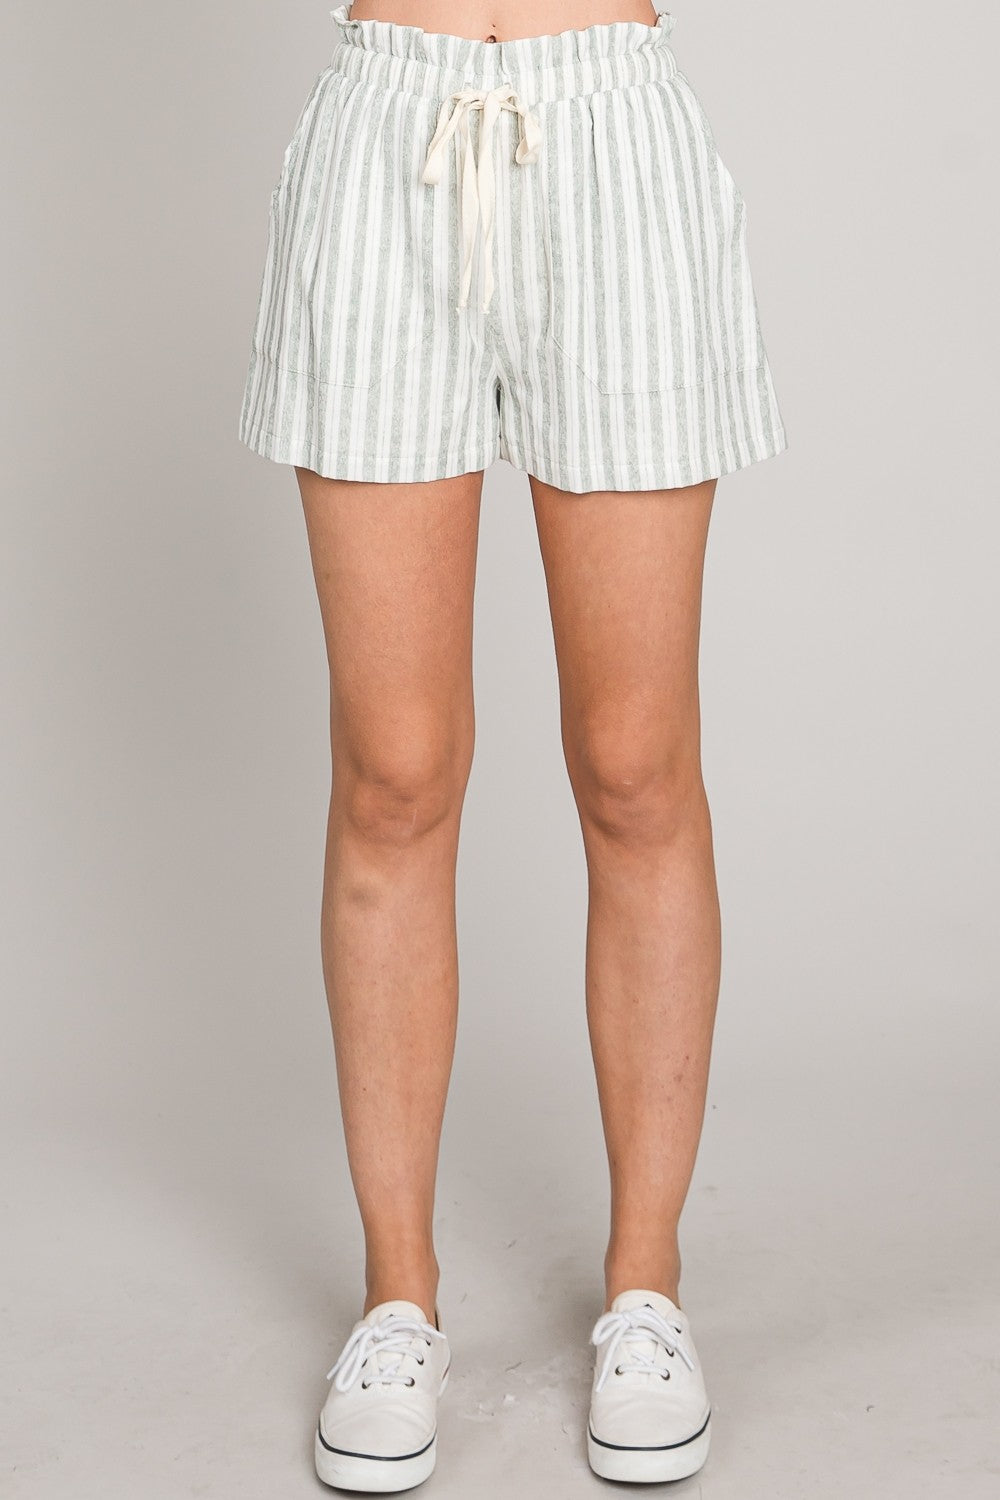 Seafree Shorts